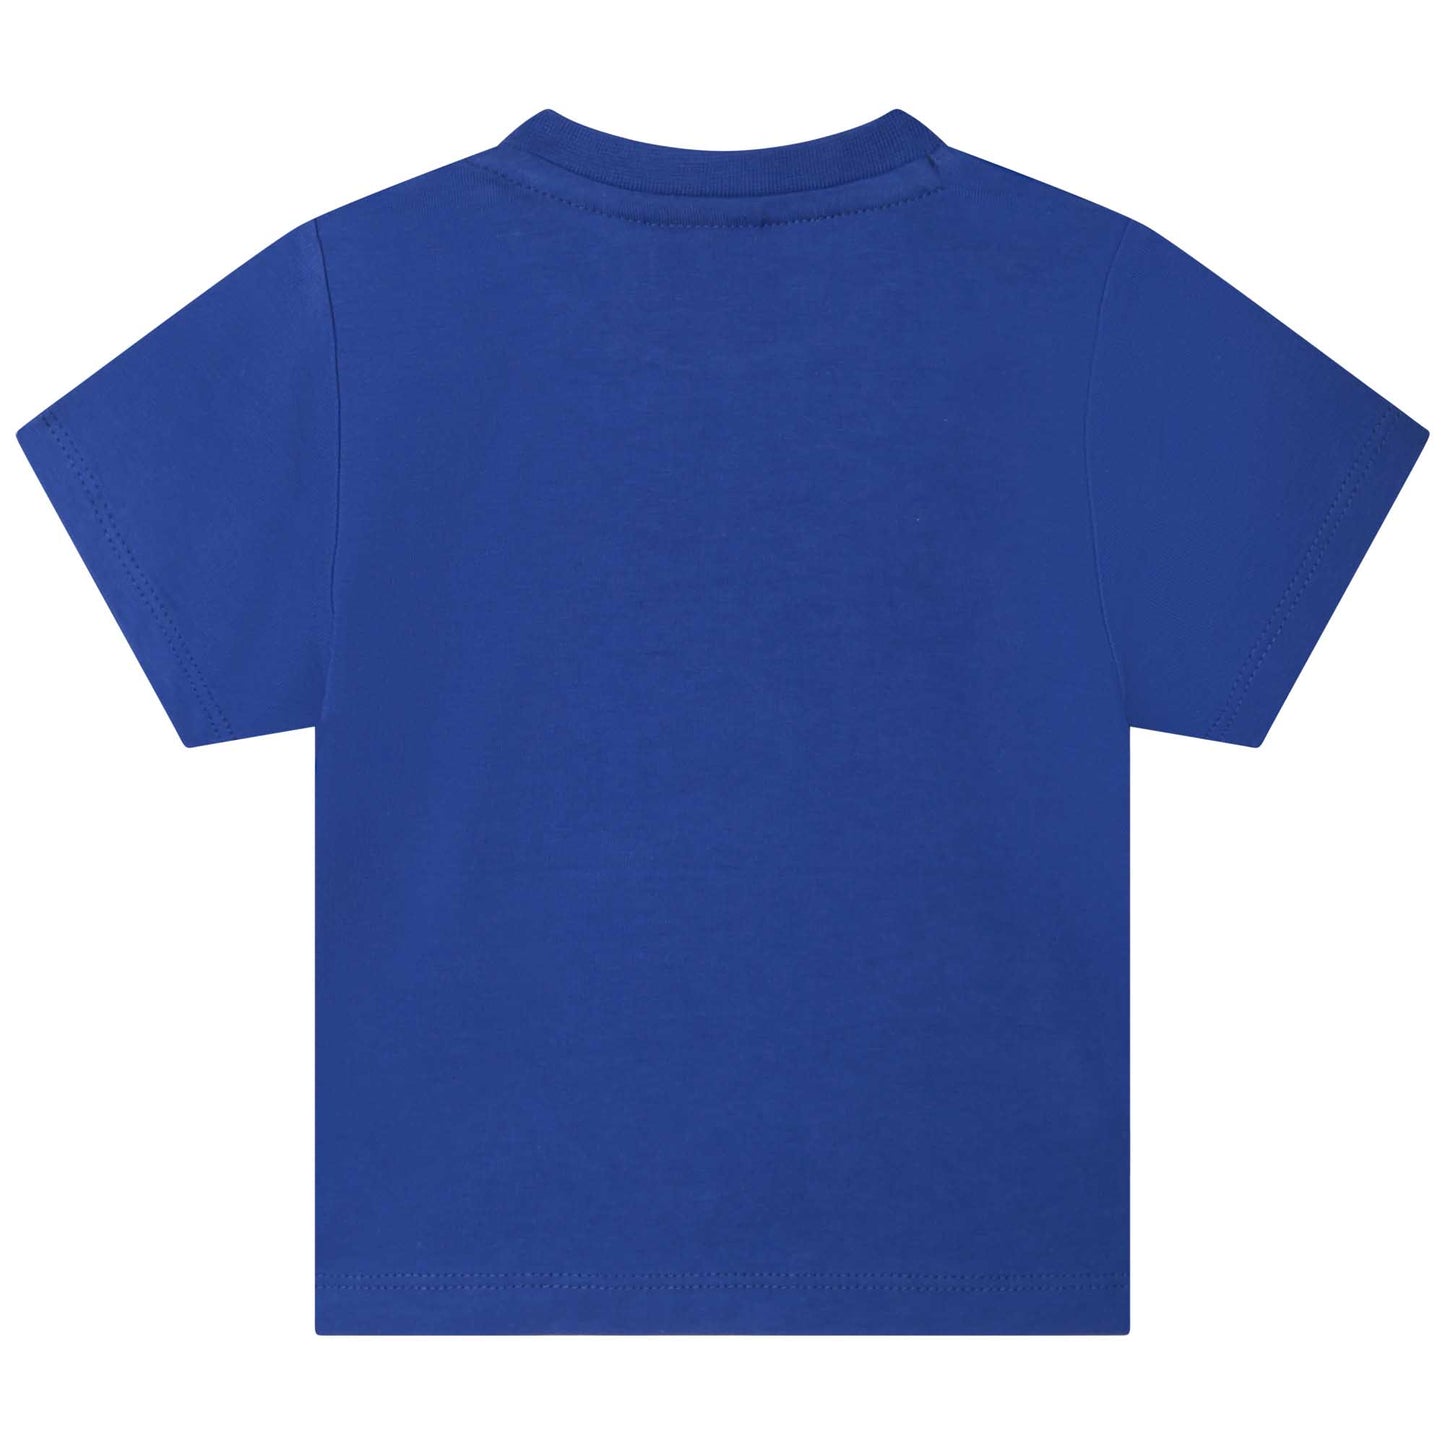 Hugo Boss Baby Tennis T-shirt w/Logo _Blue J05A01-79B